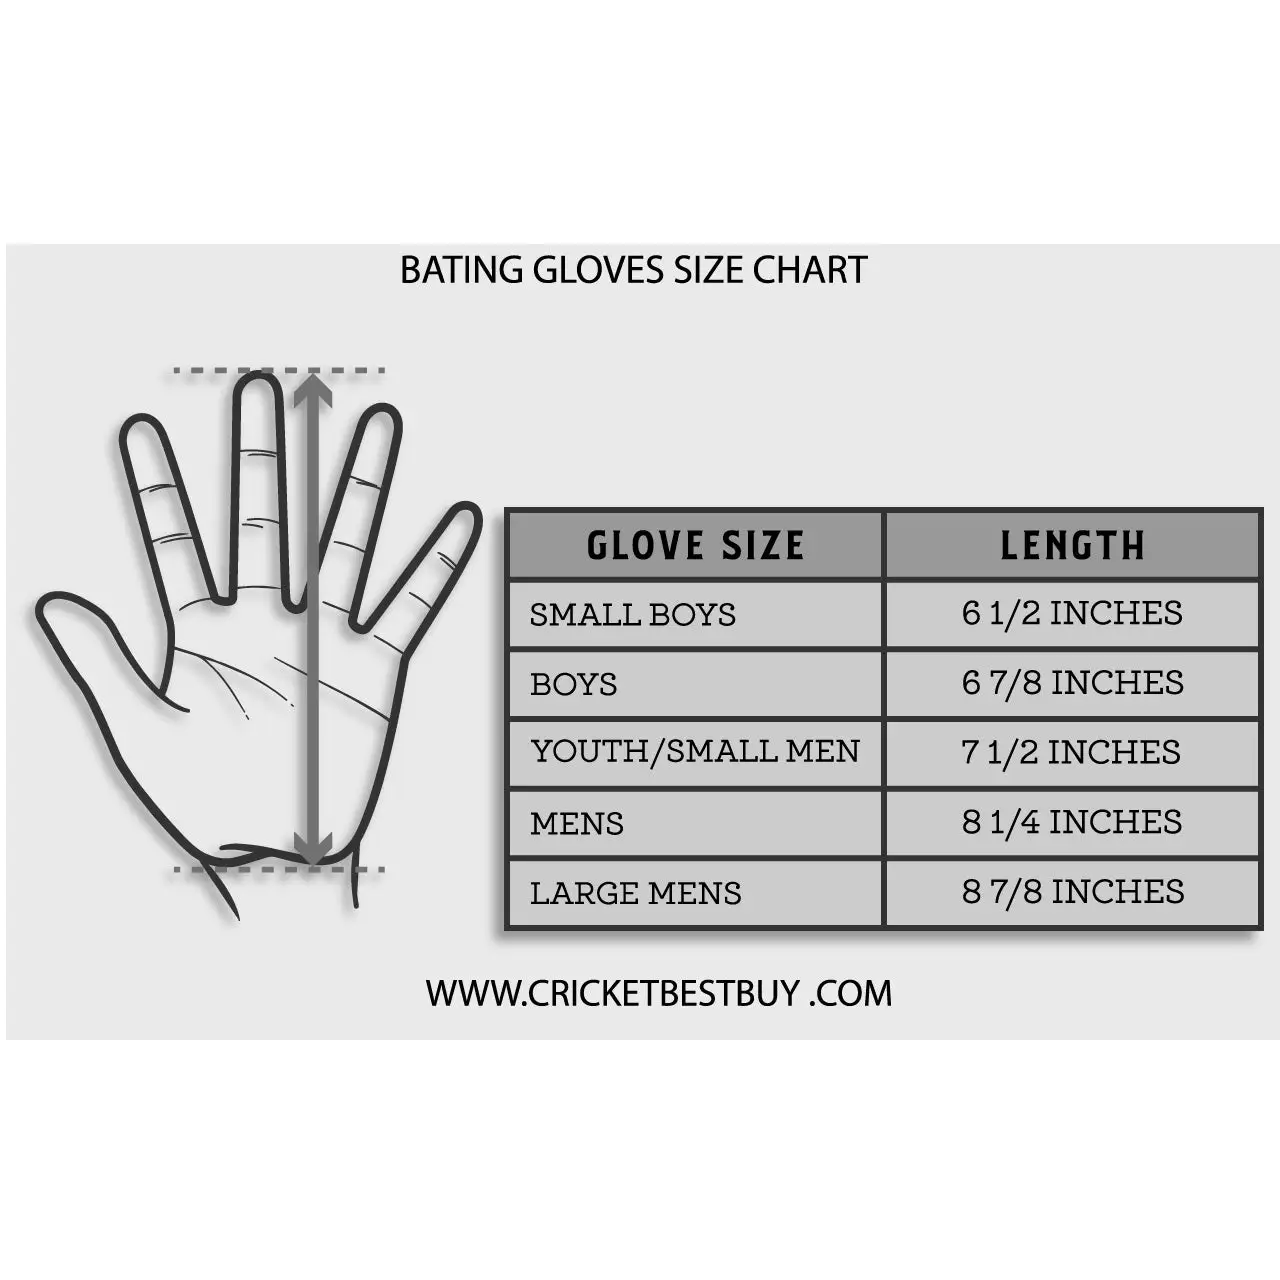 Kookaburra T20 Flare Cricket Batting Gloves - GLOVE - BATTING